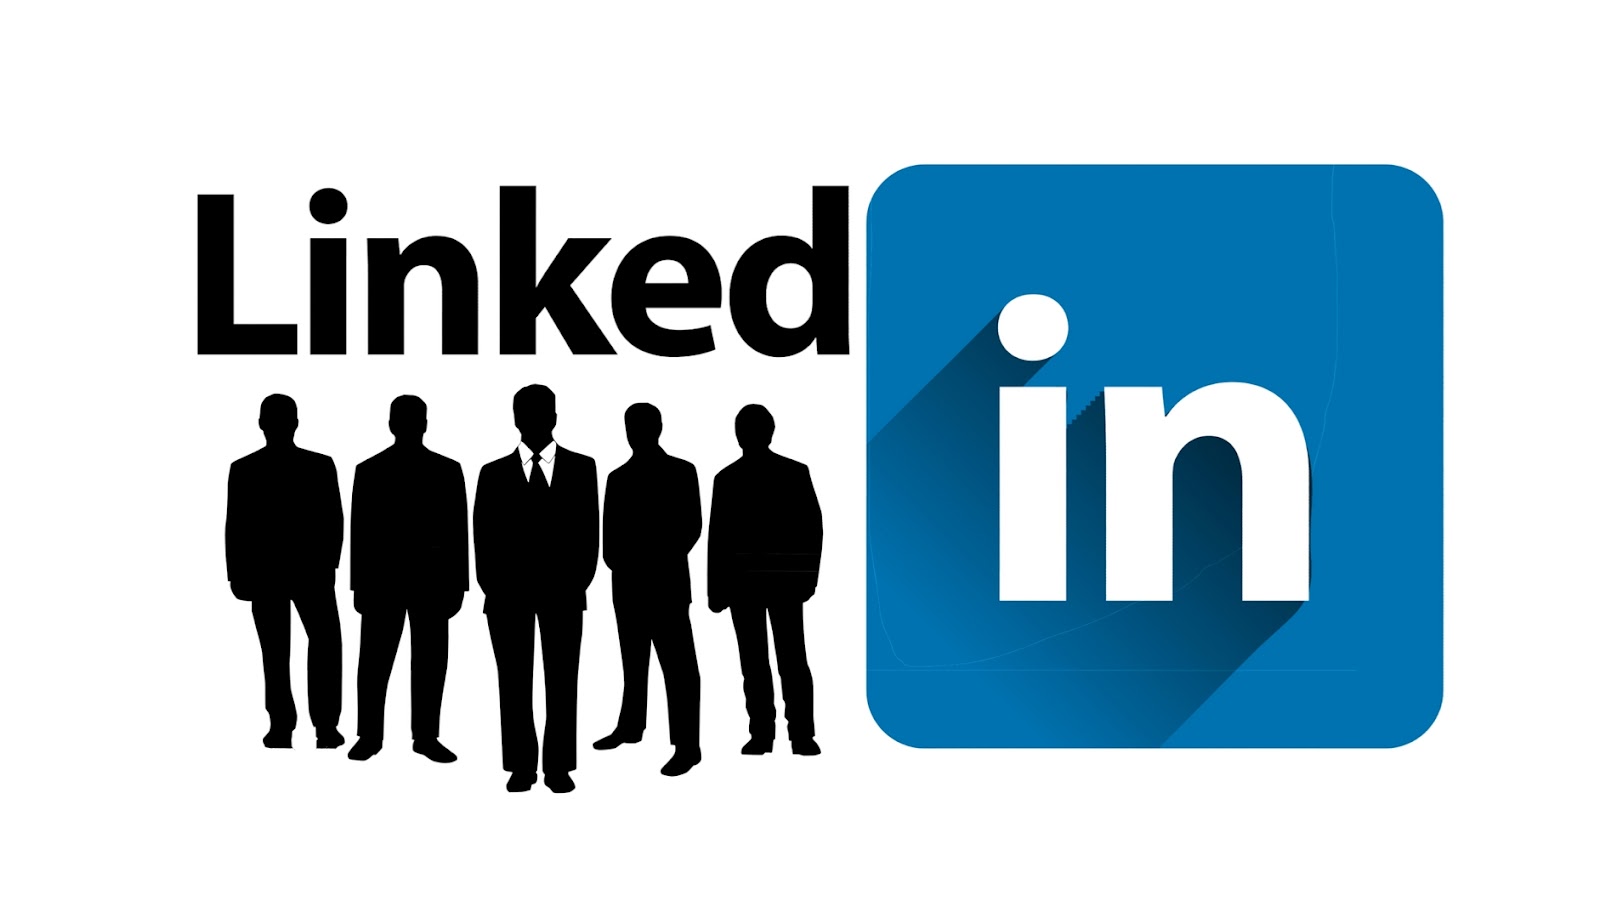 LinkedIn Plans To Explore Influencer Marketing Just Like TikTok and Instagram